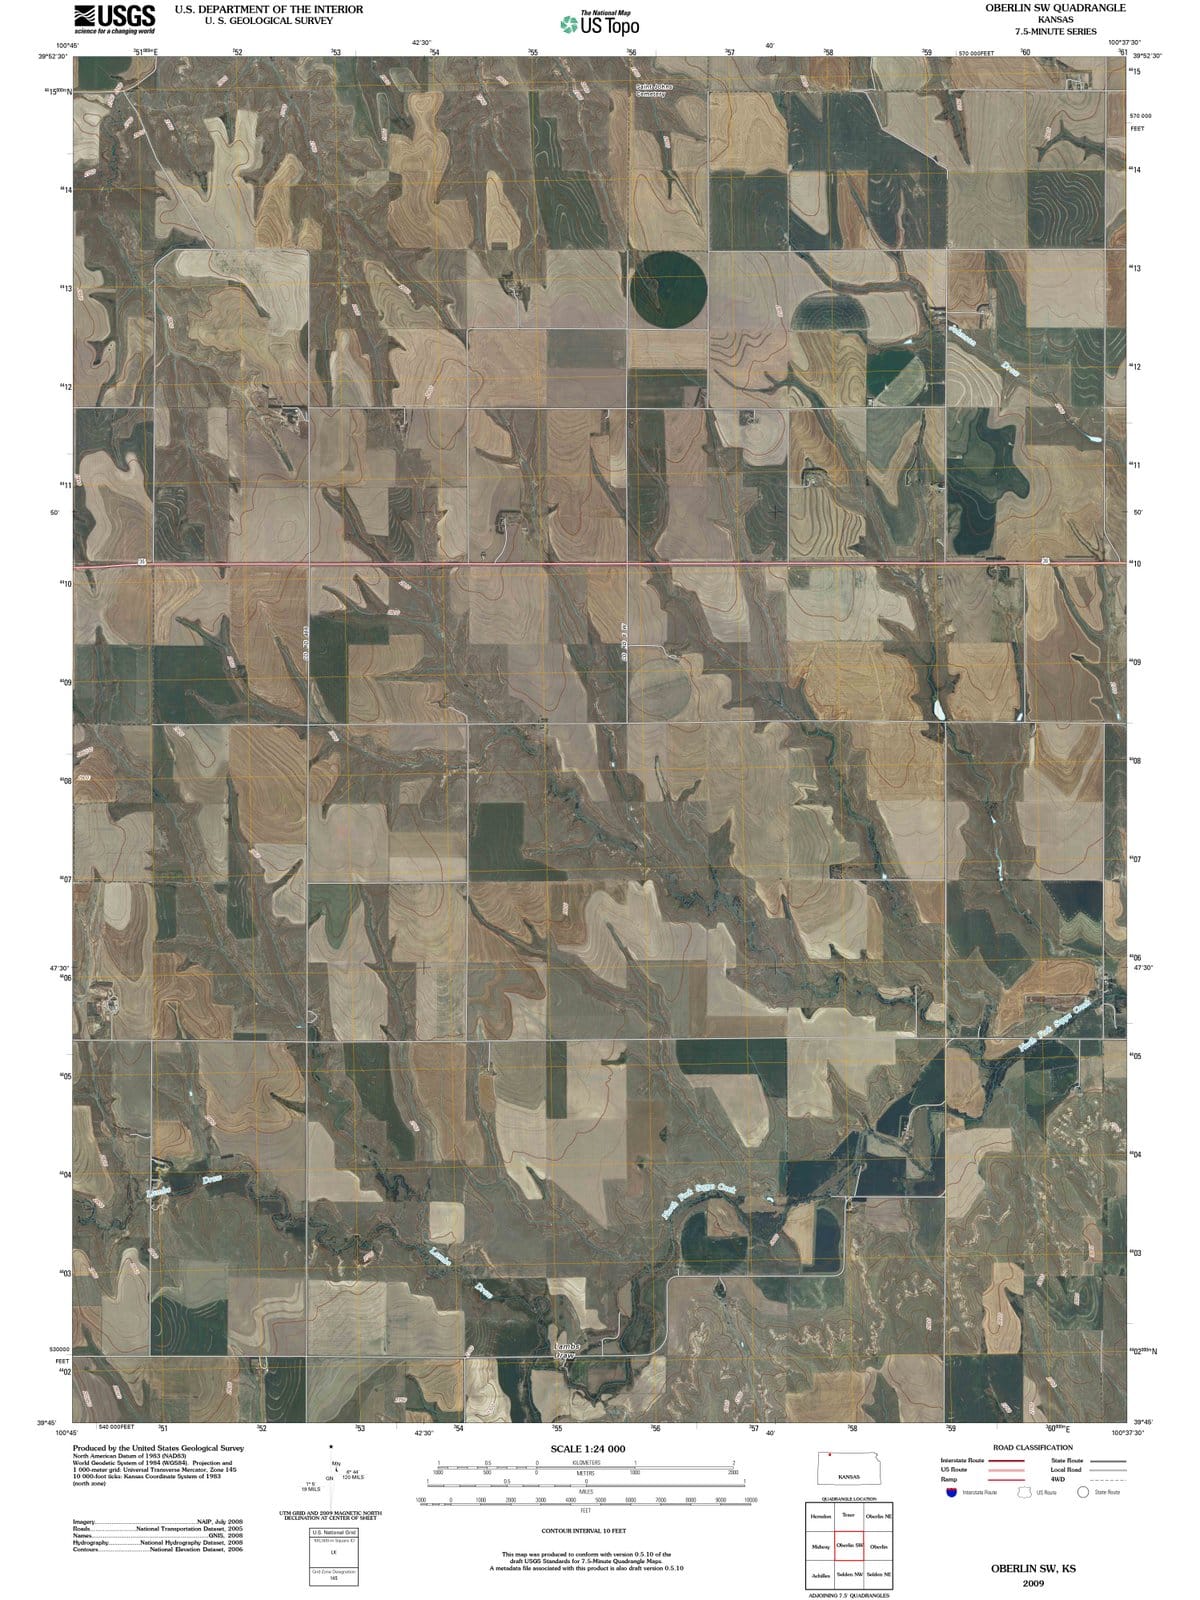 2009 Oberlin, KS - Kansas - USGS Topographic Map